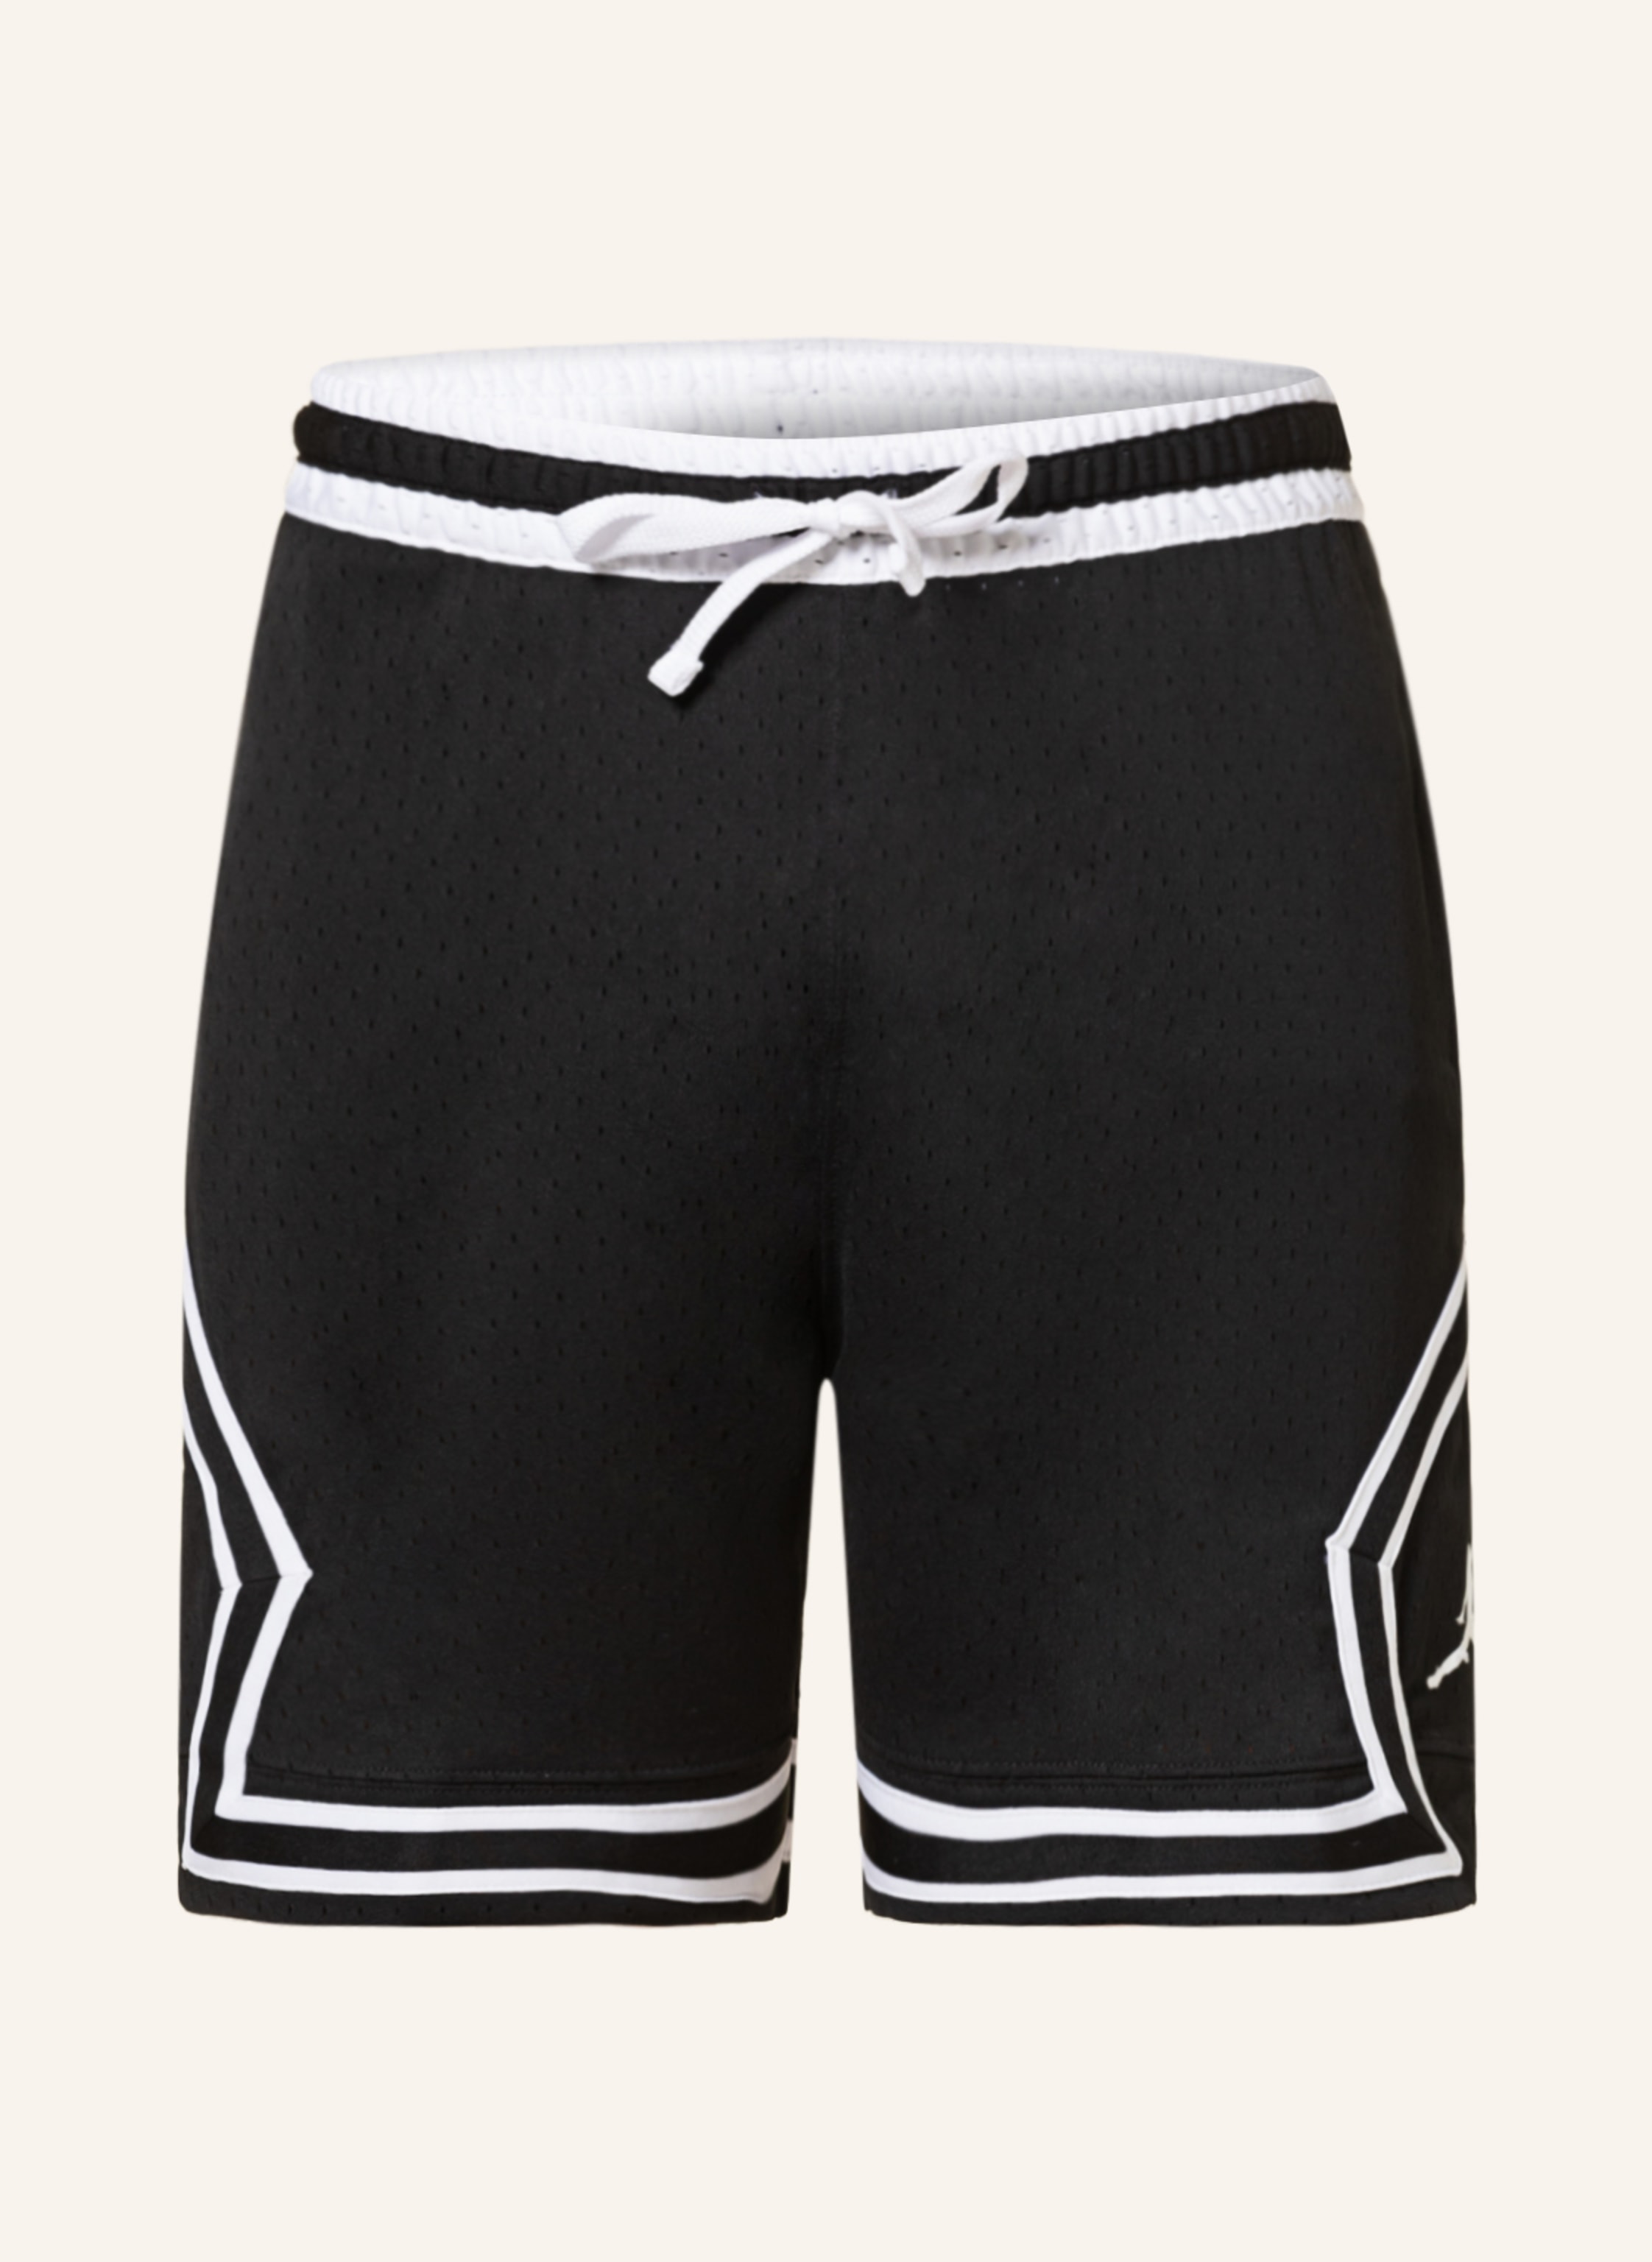 JORDAN Basketball shorts DRI-FIT SPORT made of mesh in black/ white